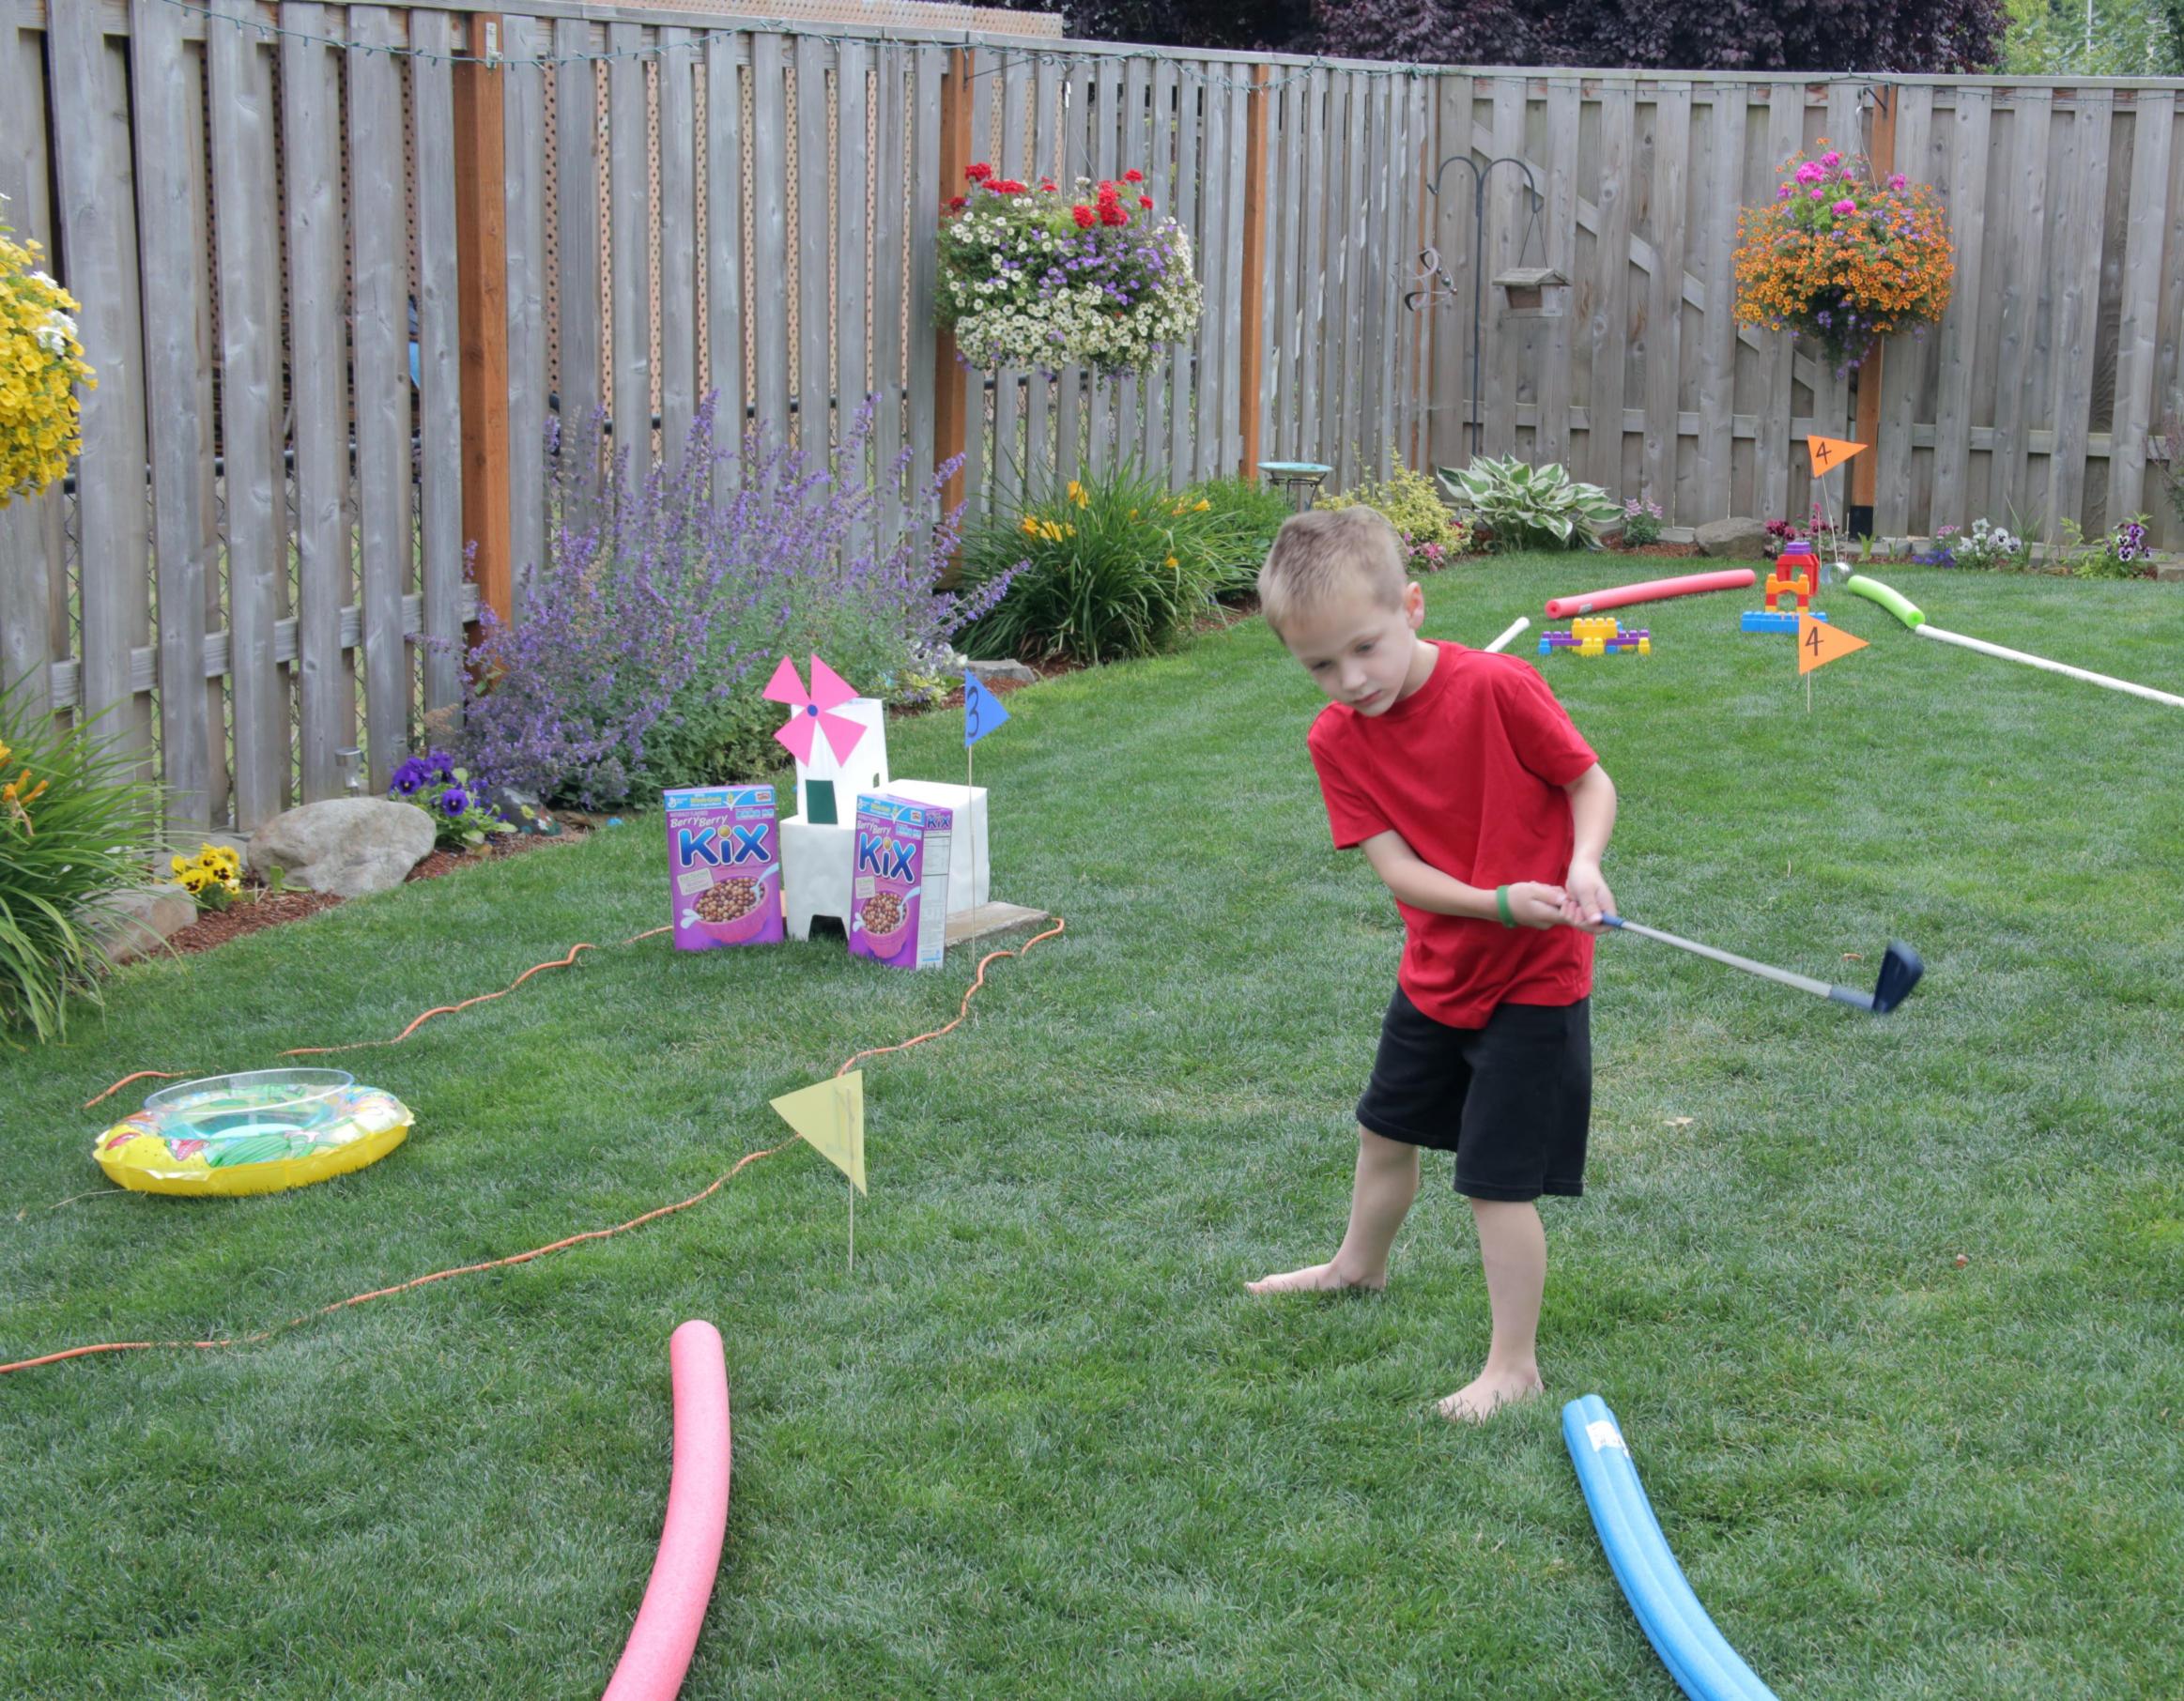 Outdoor Fun: Backyard Mini Golf Course · Kix Cereal